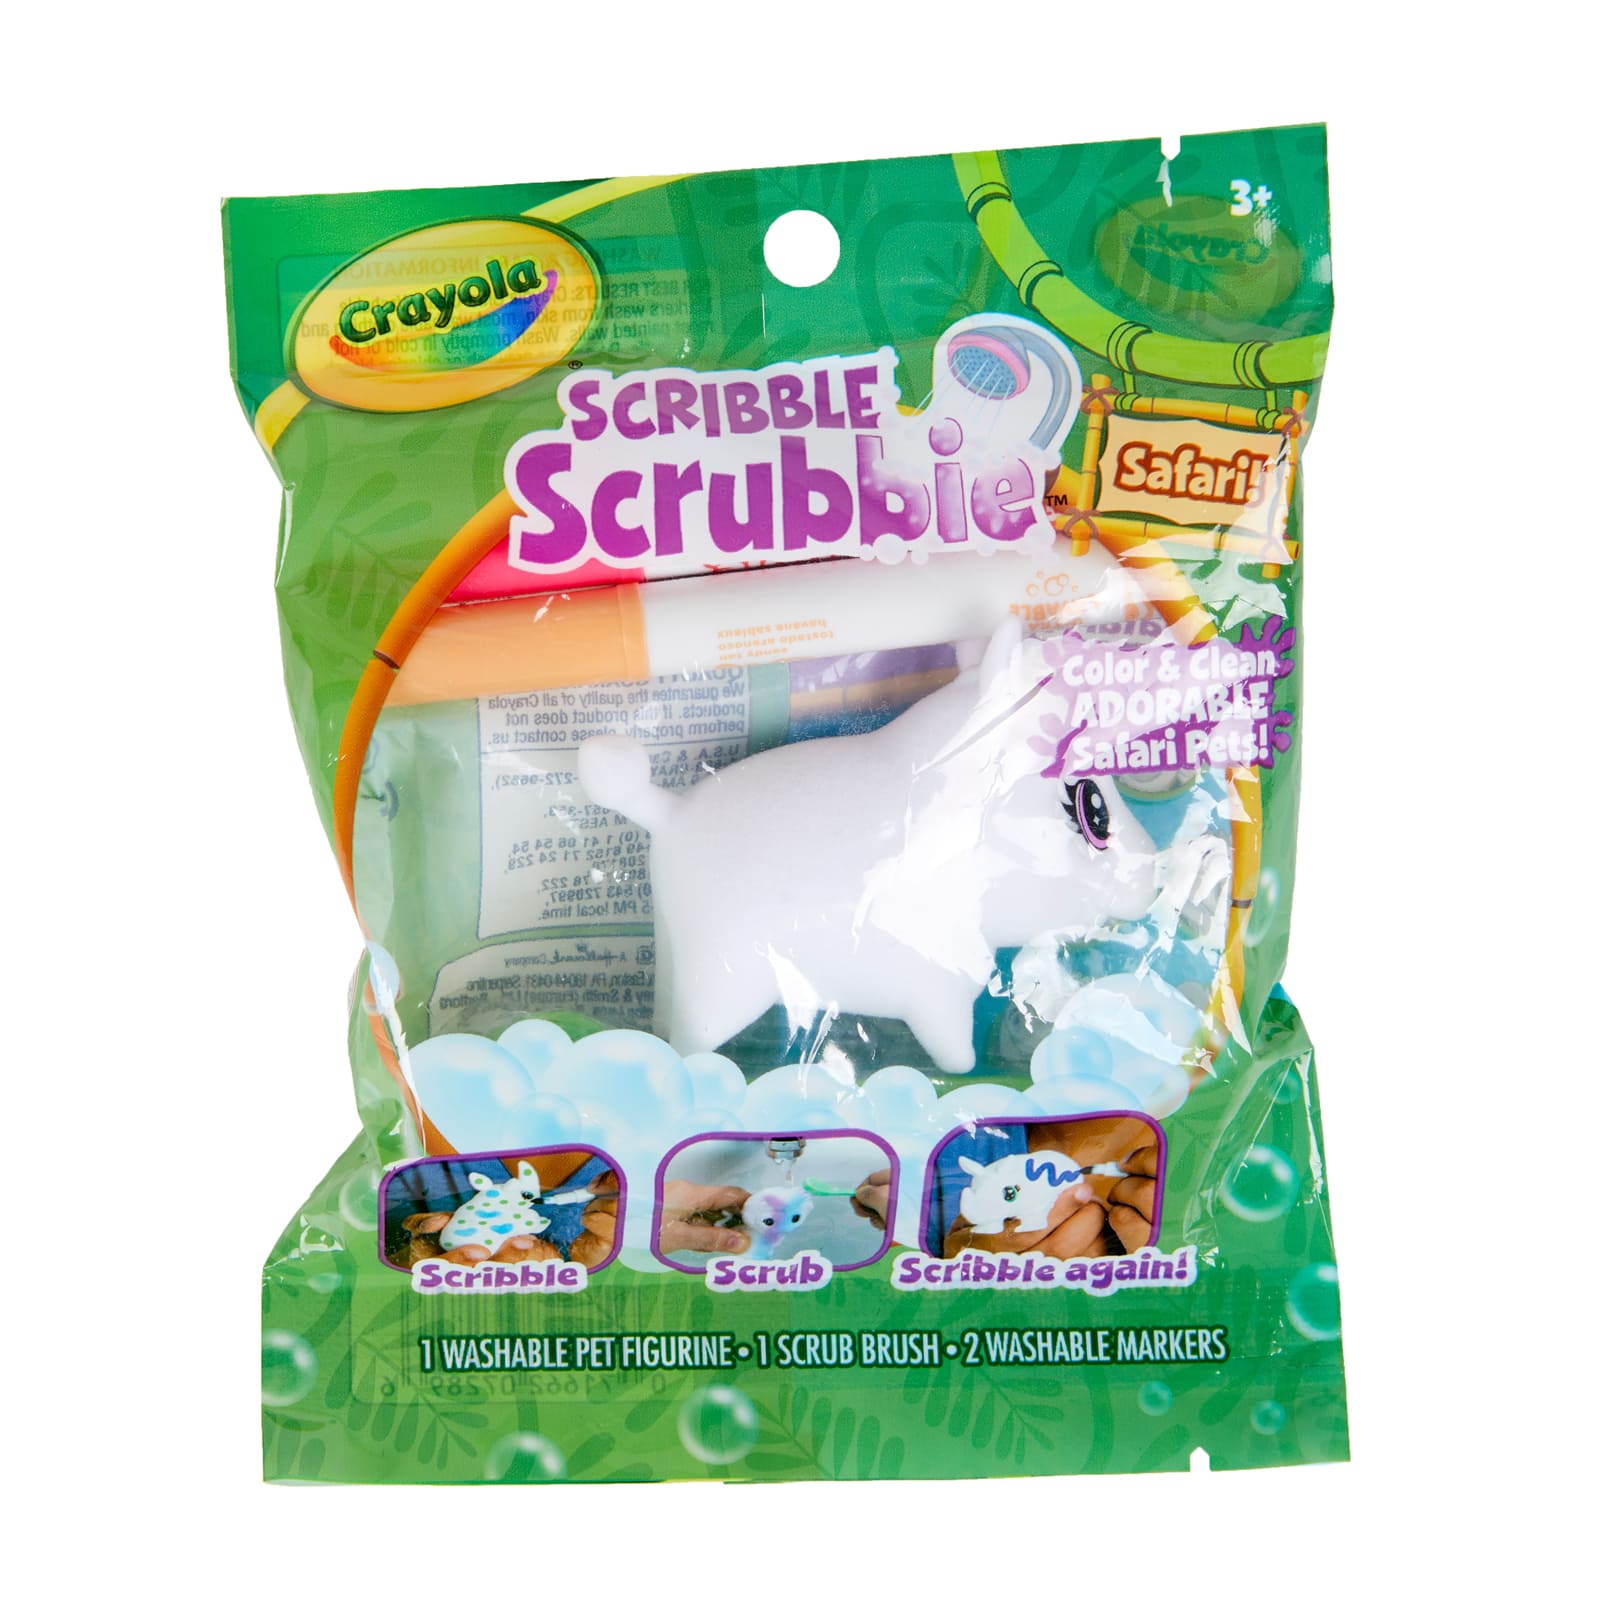 Crayola Scribble Scrubbie Safari Animals Tub Set, Michaels